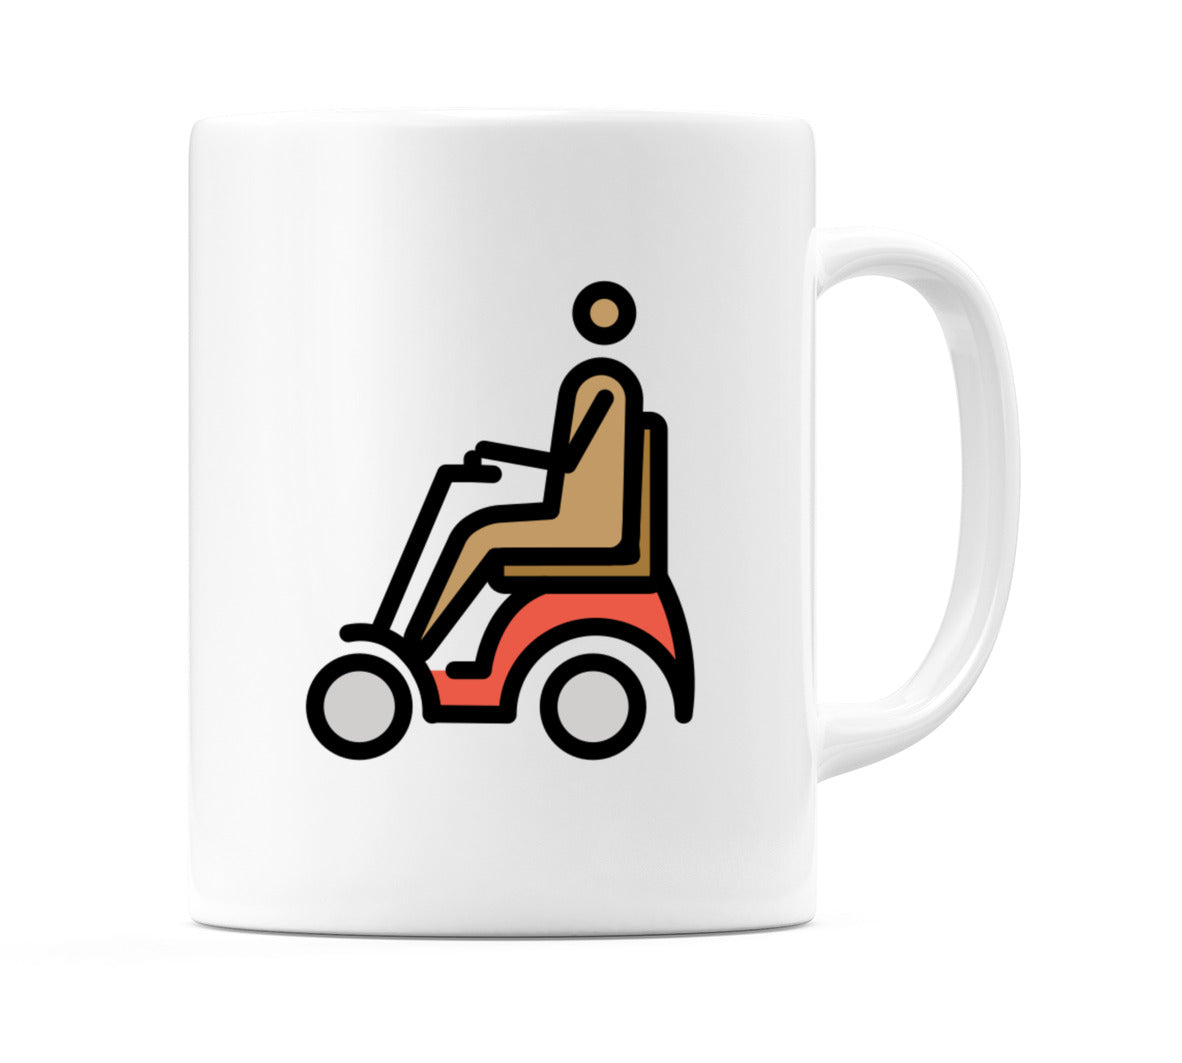 Male In Motorized Wheelchair: Medium Skin Tone Emoji Mug